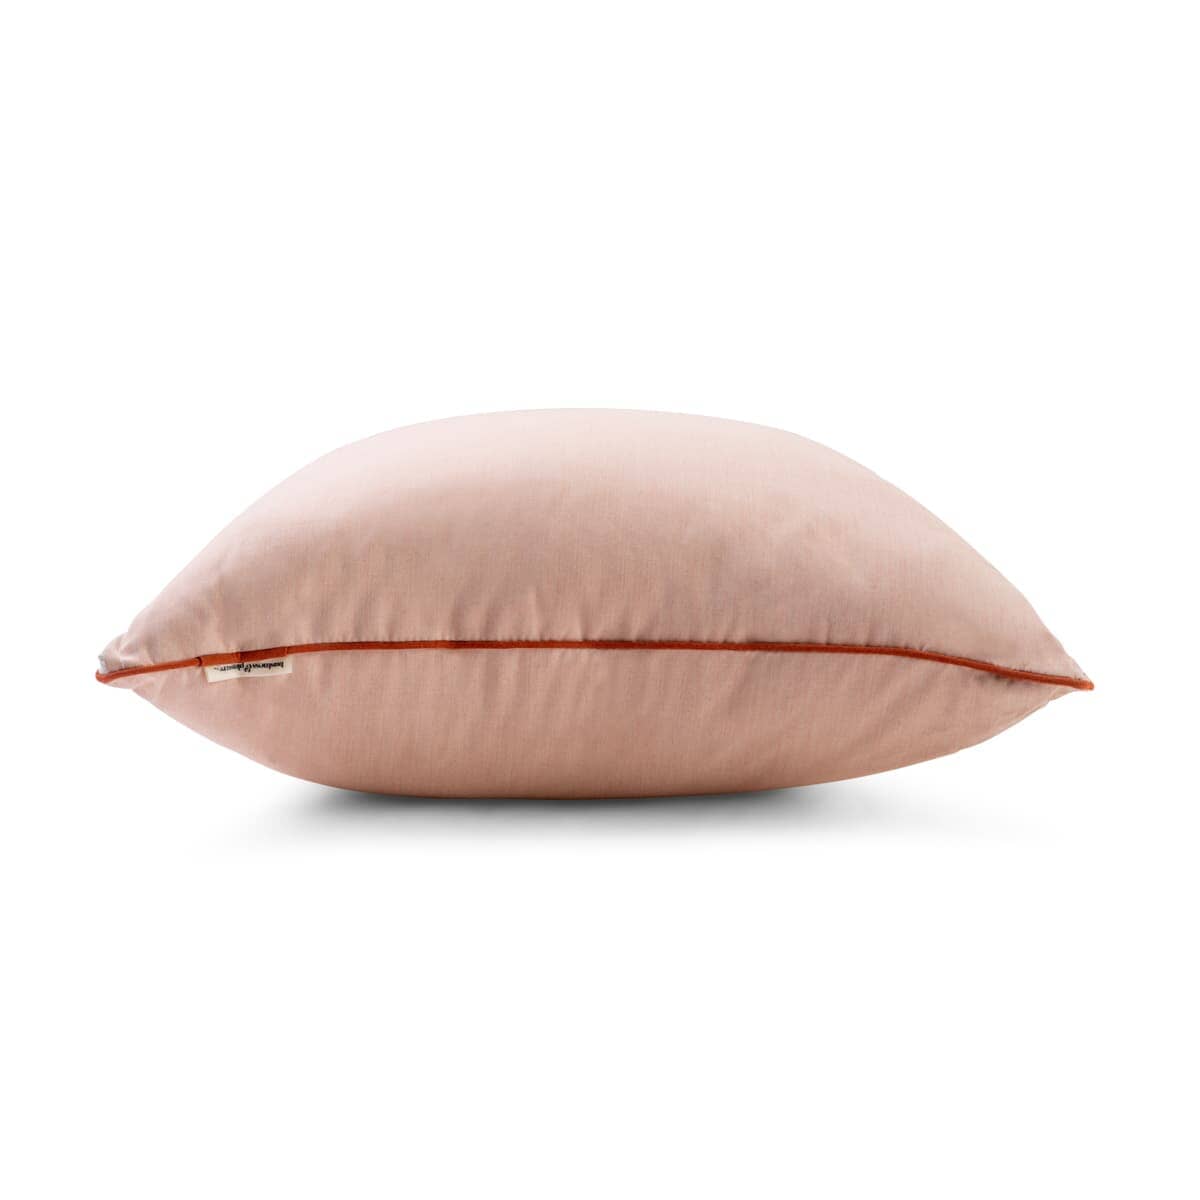 Studio image of pink cushion